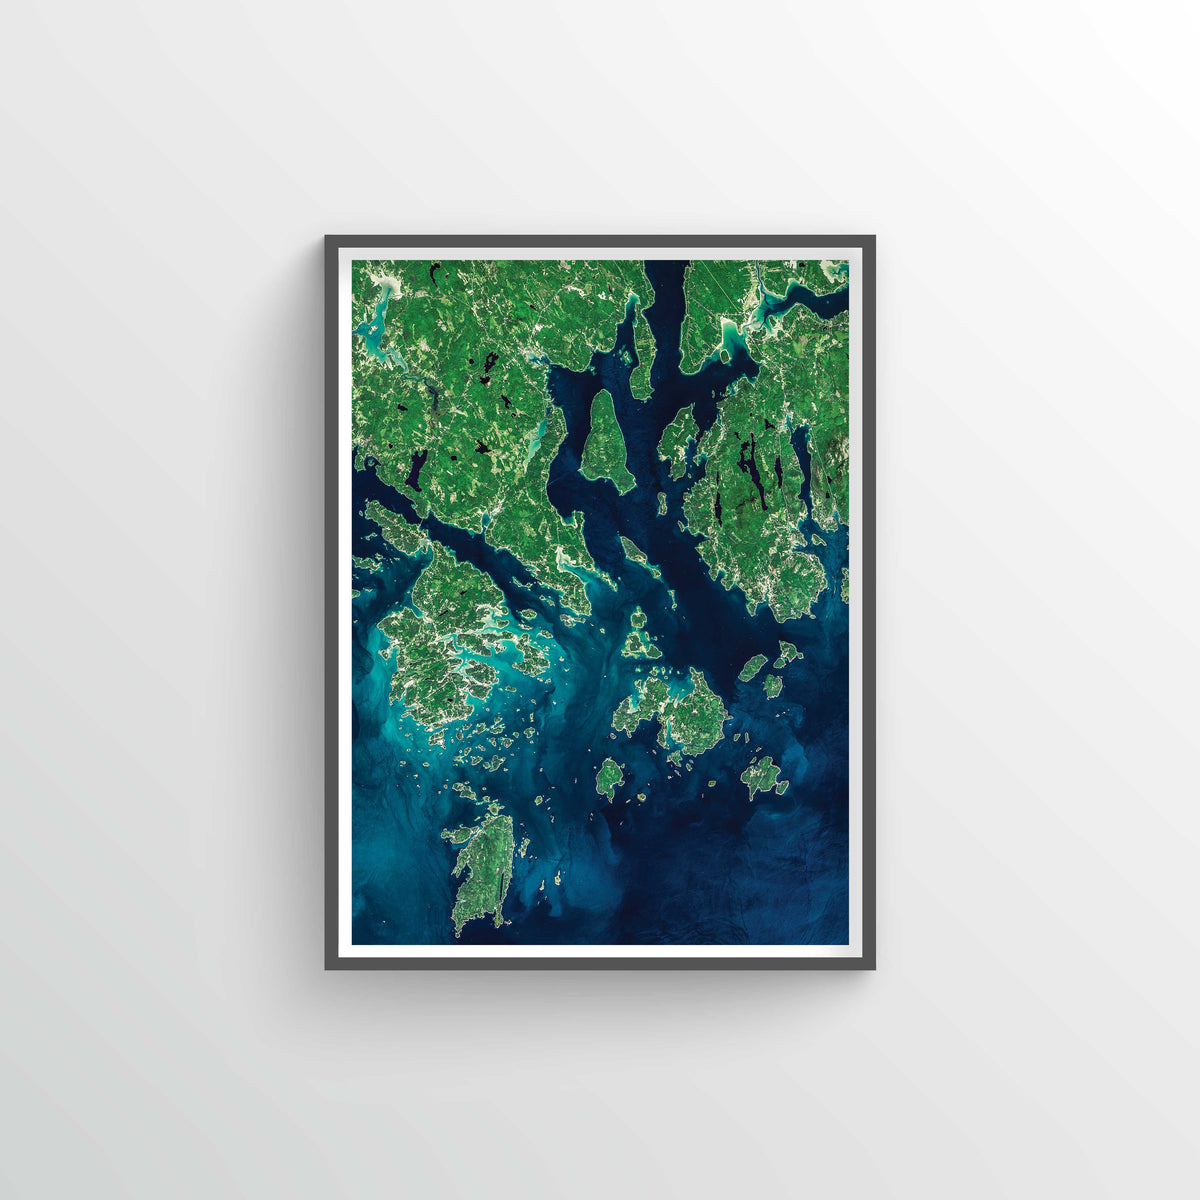 Acadia Earth Photography - Art Print